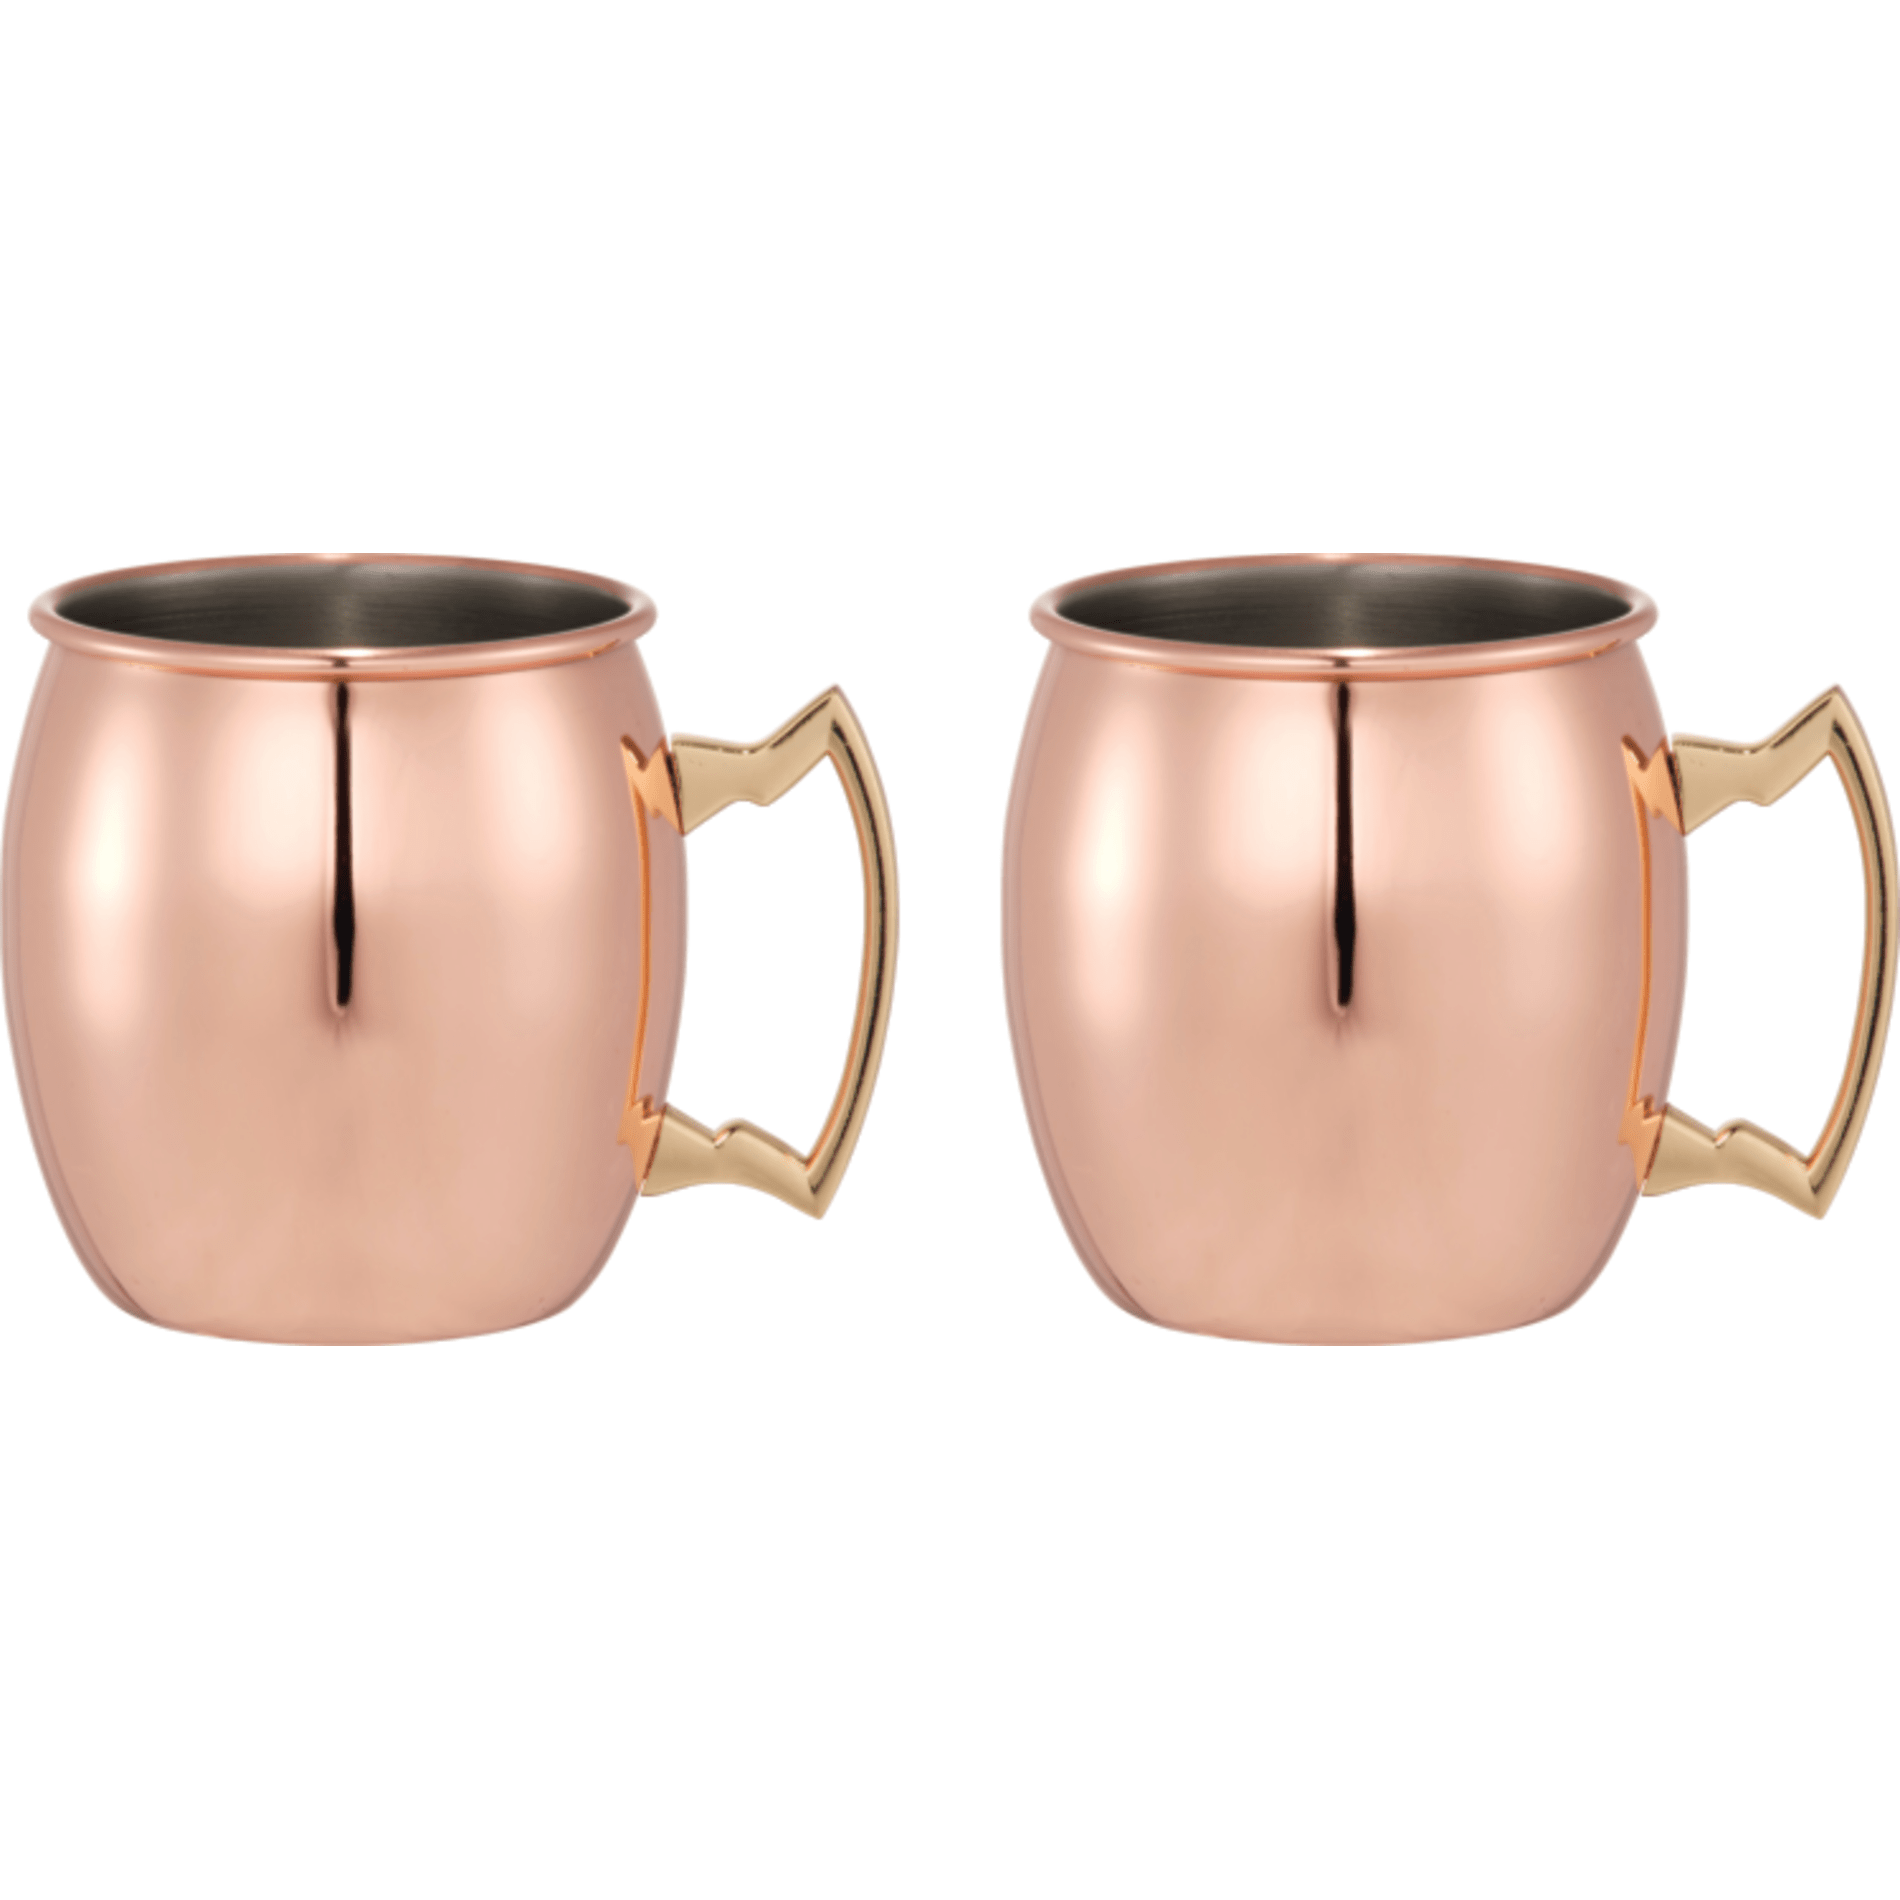 LEEDS 1625-22 - Moscow Mule Mug 4-in-1 Gift Set